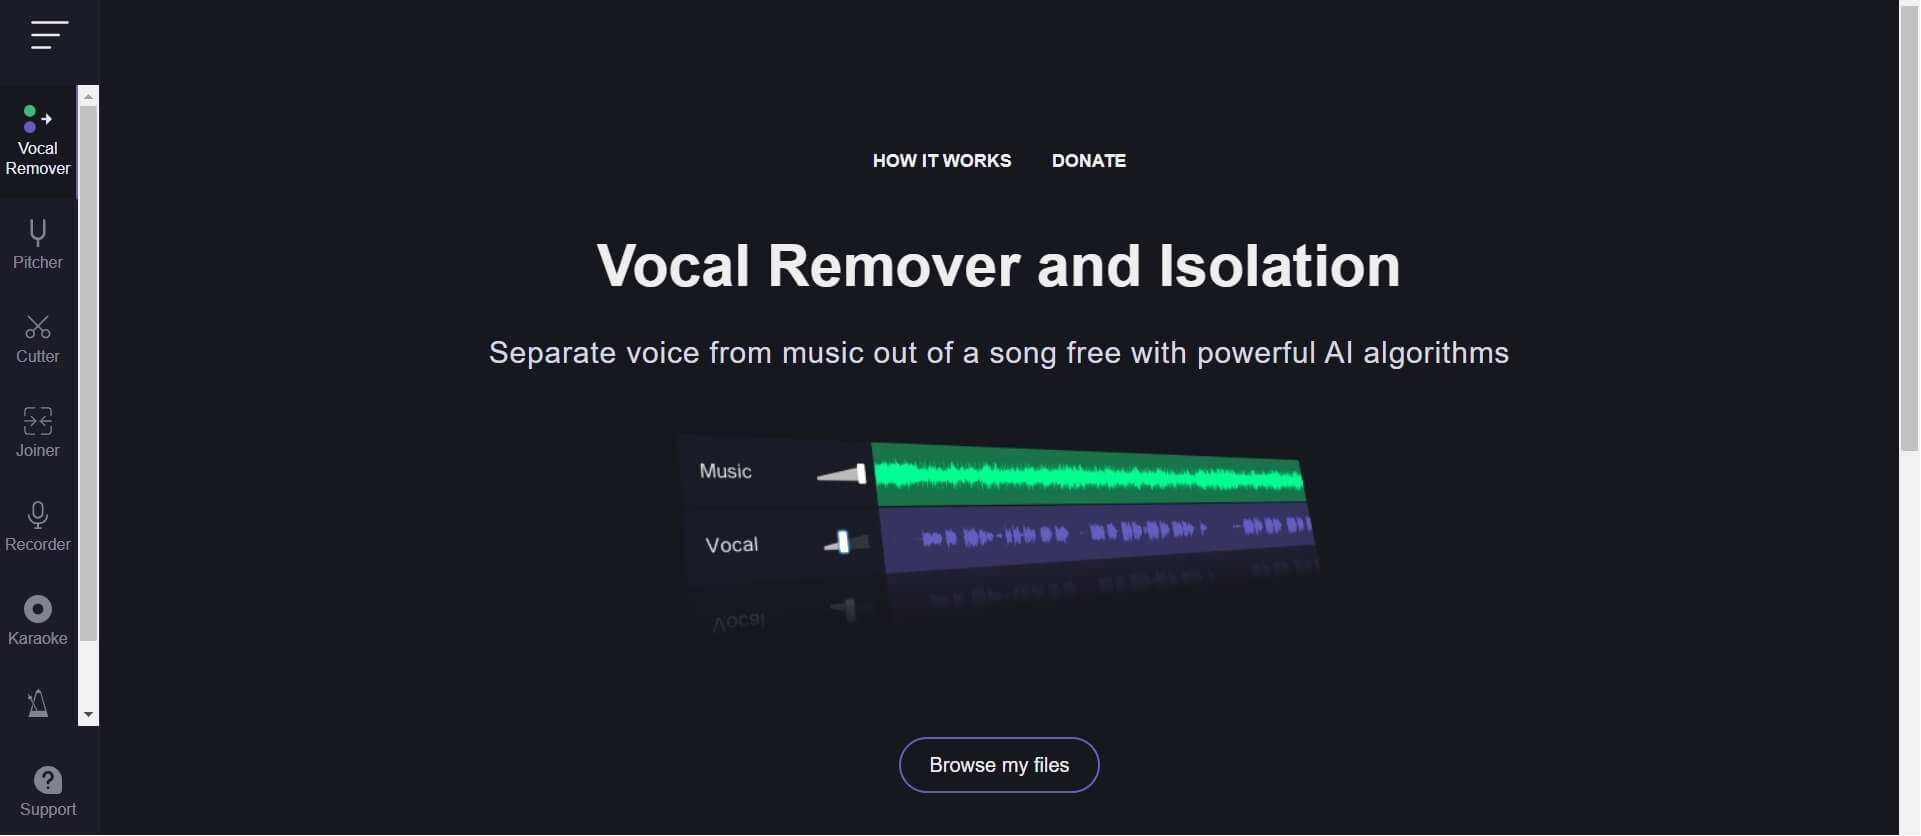 vocalremover-org-interface